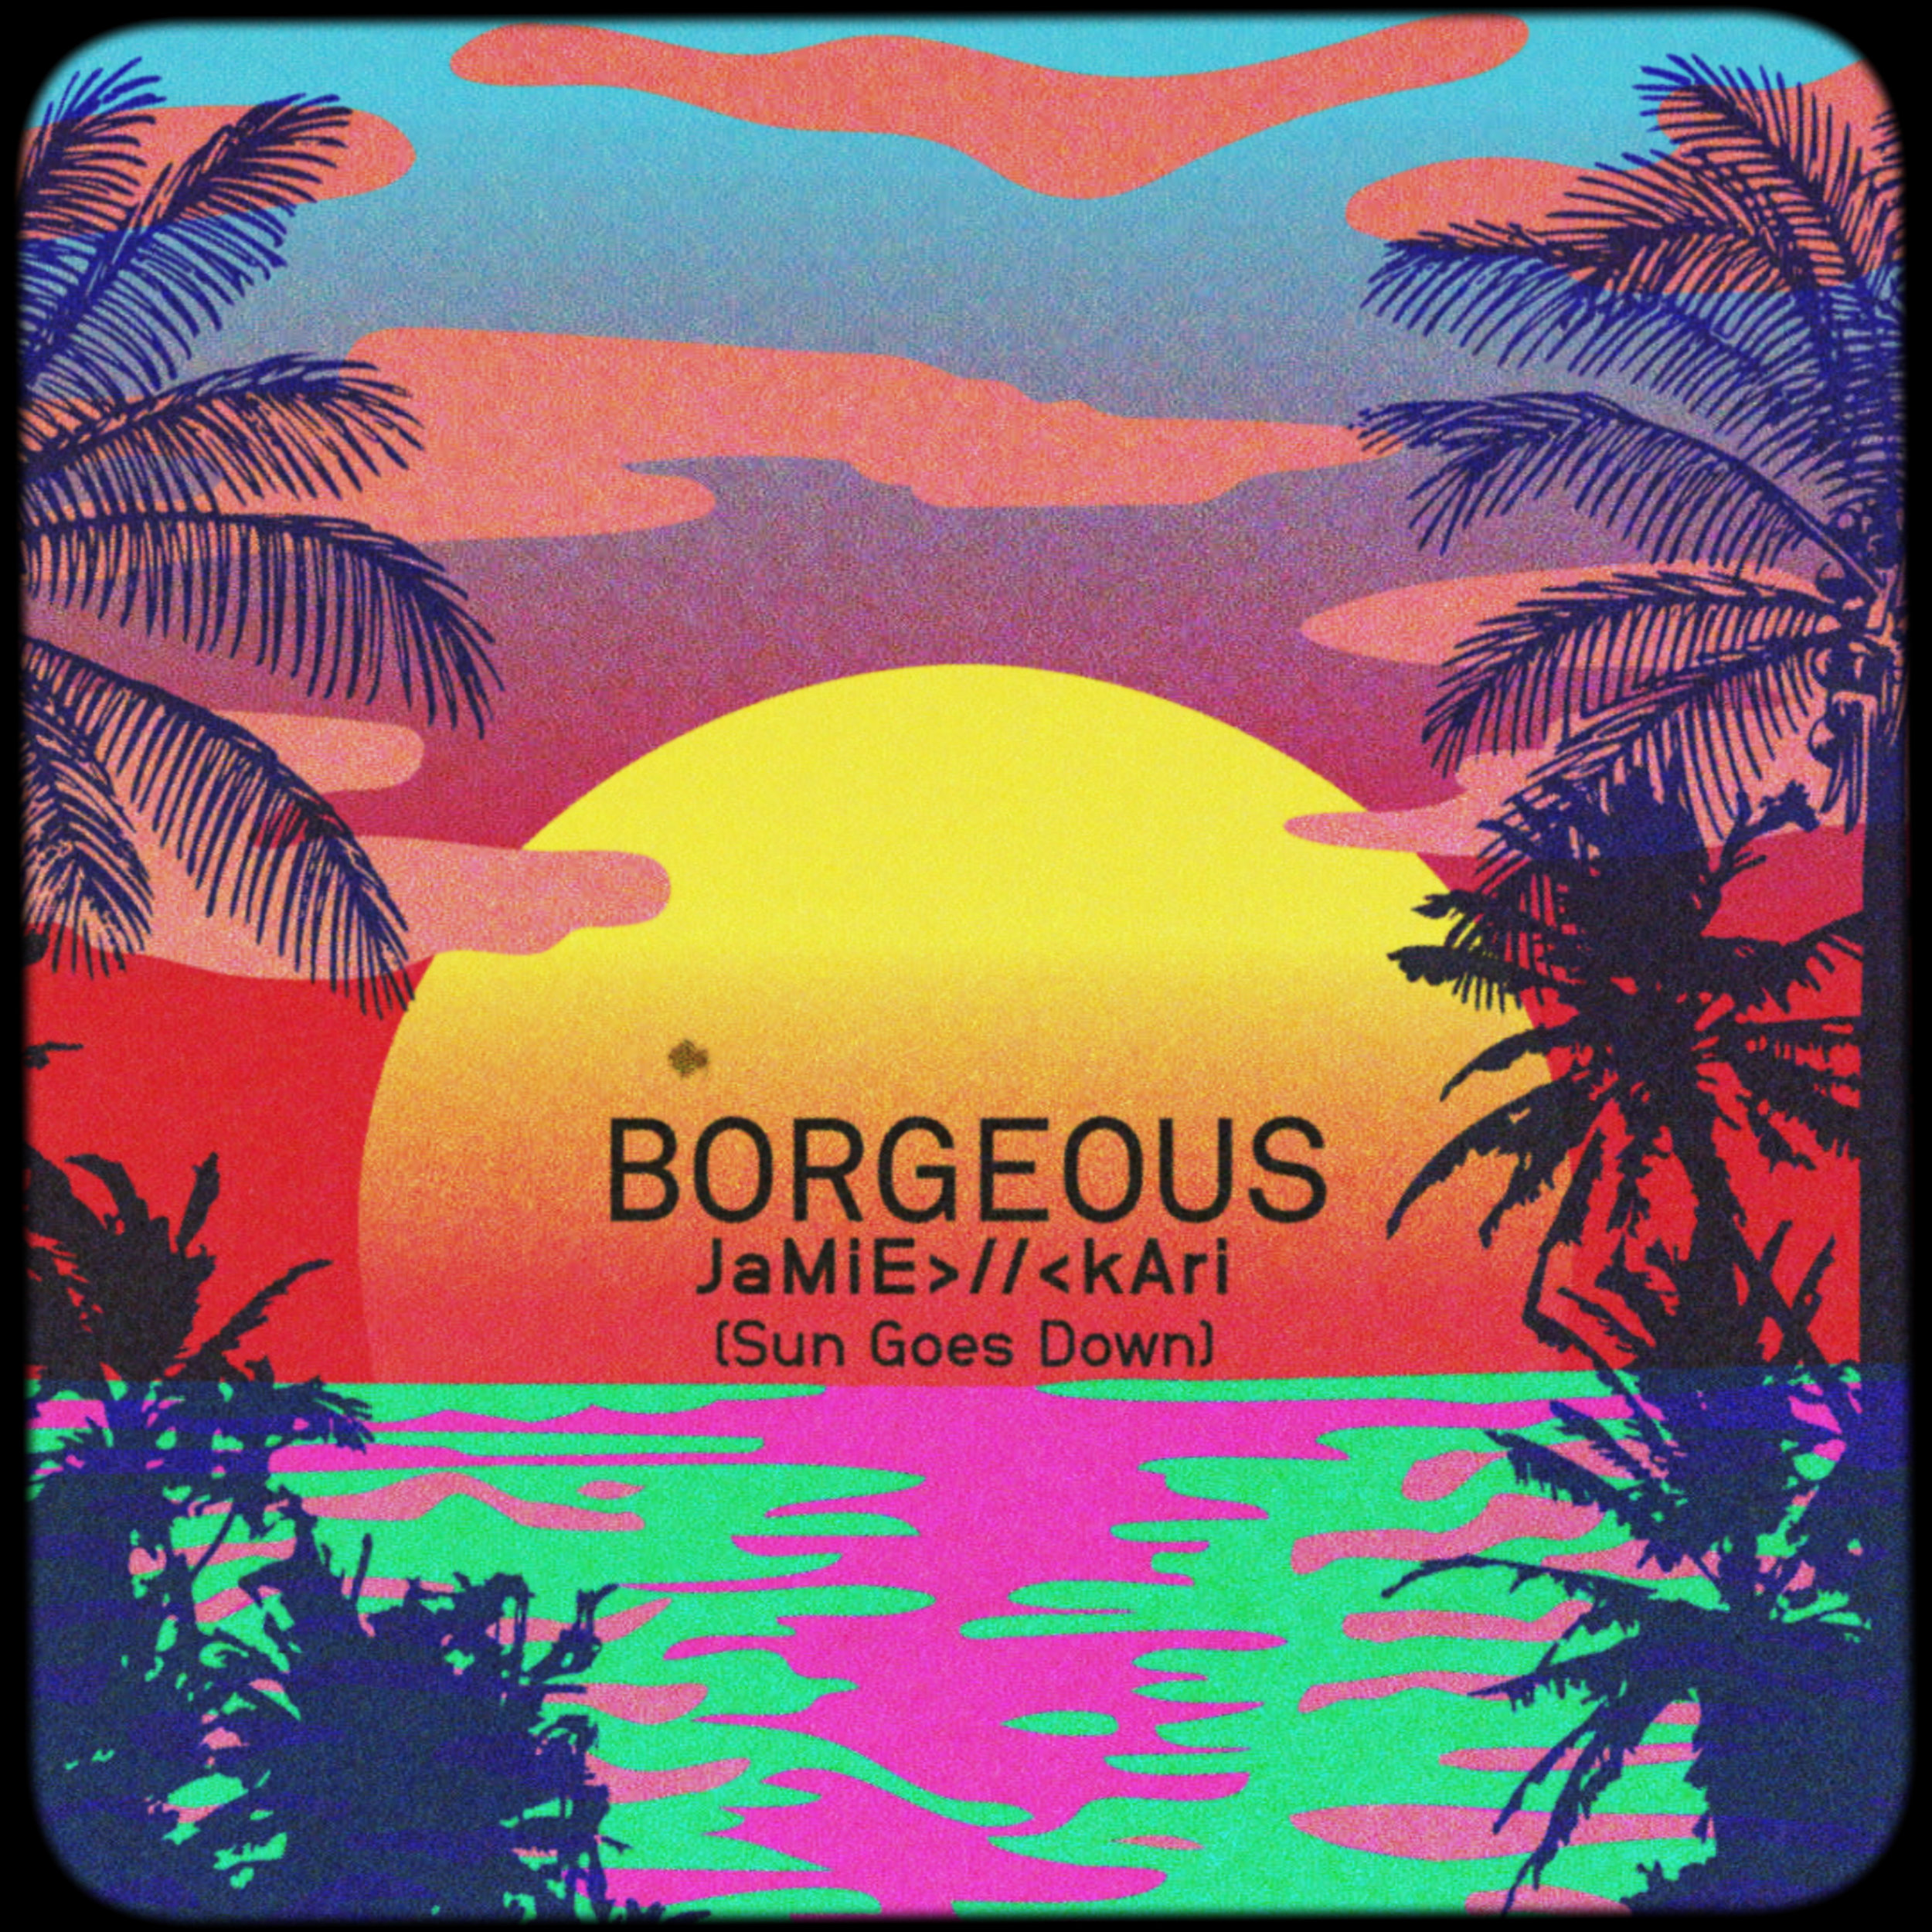 Borgeous, Sun Goes Down album art